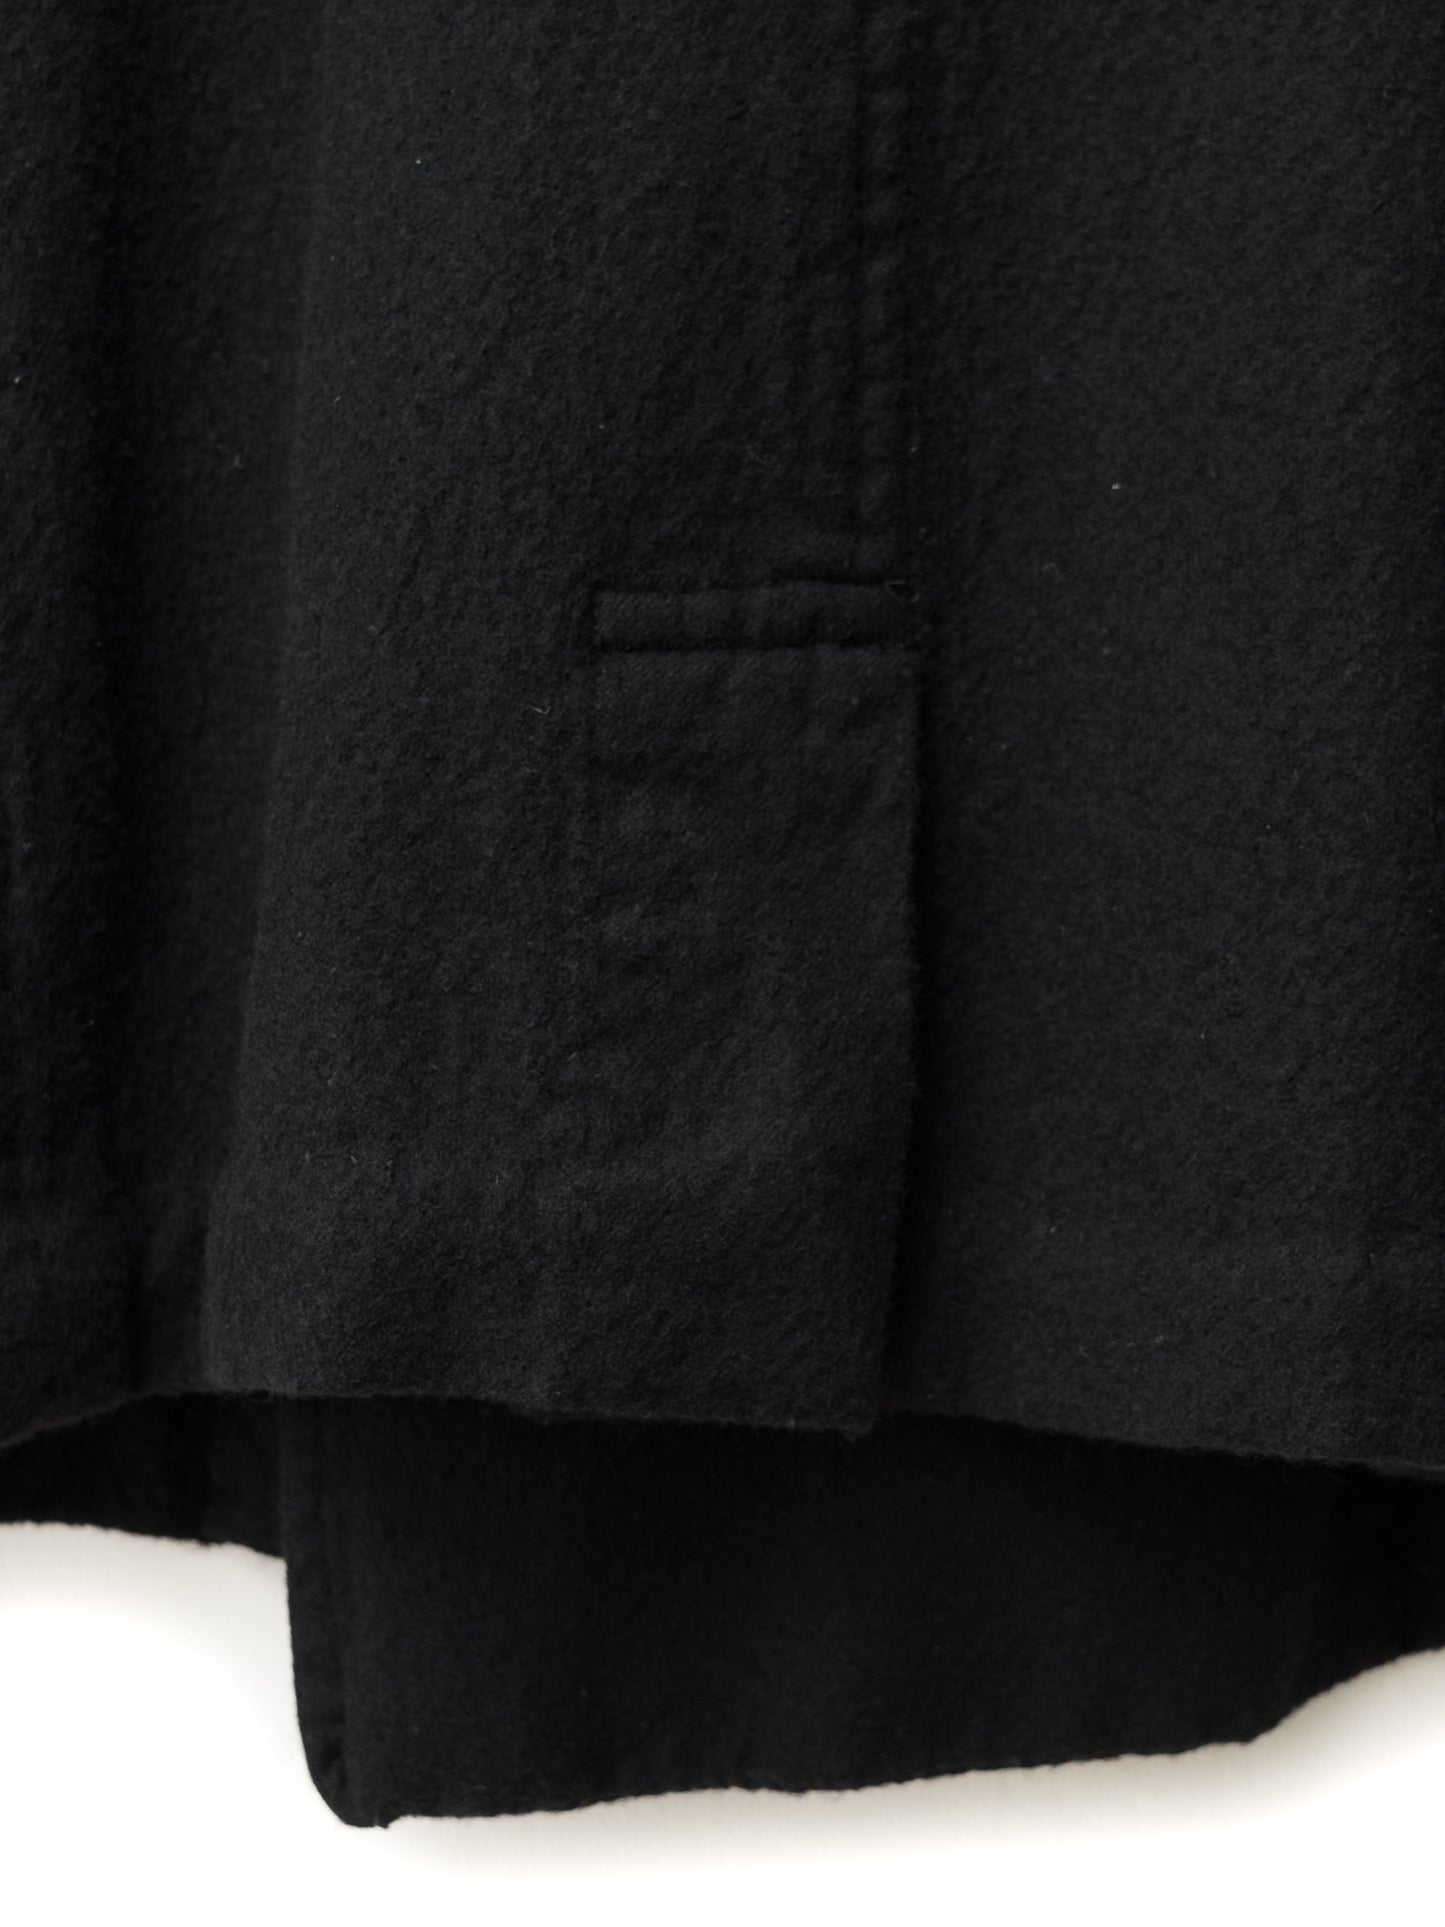 double breasted military coat black ∙ shrunken wool ∙ medium